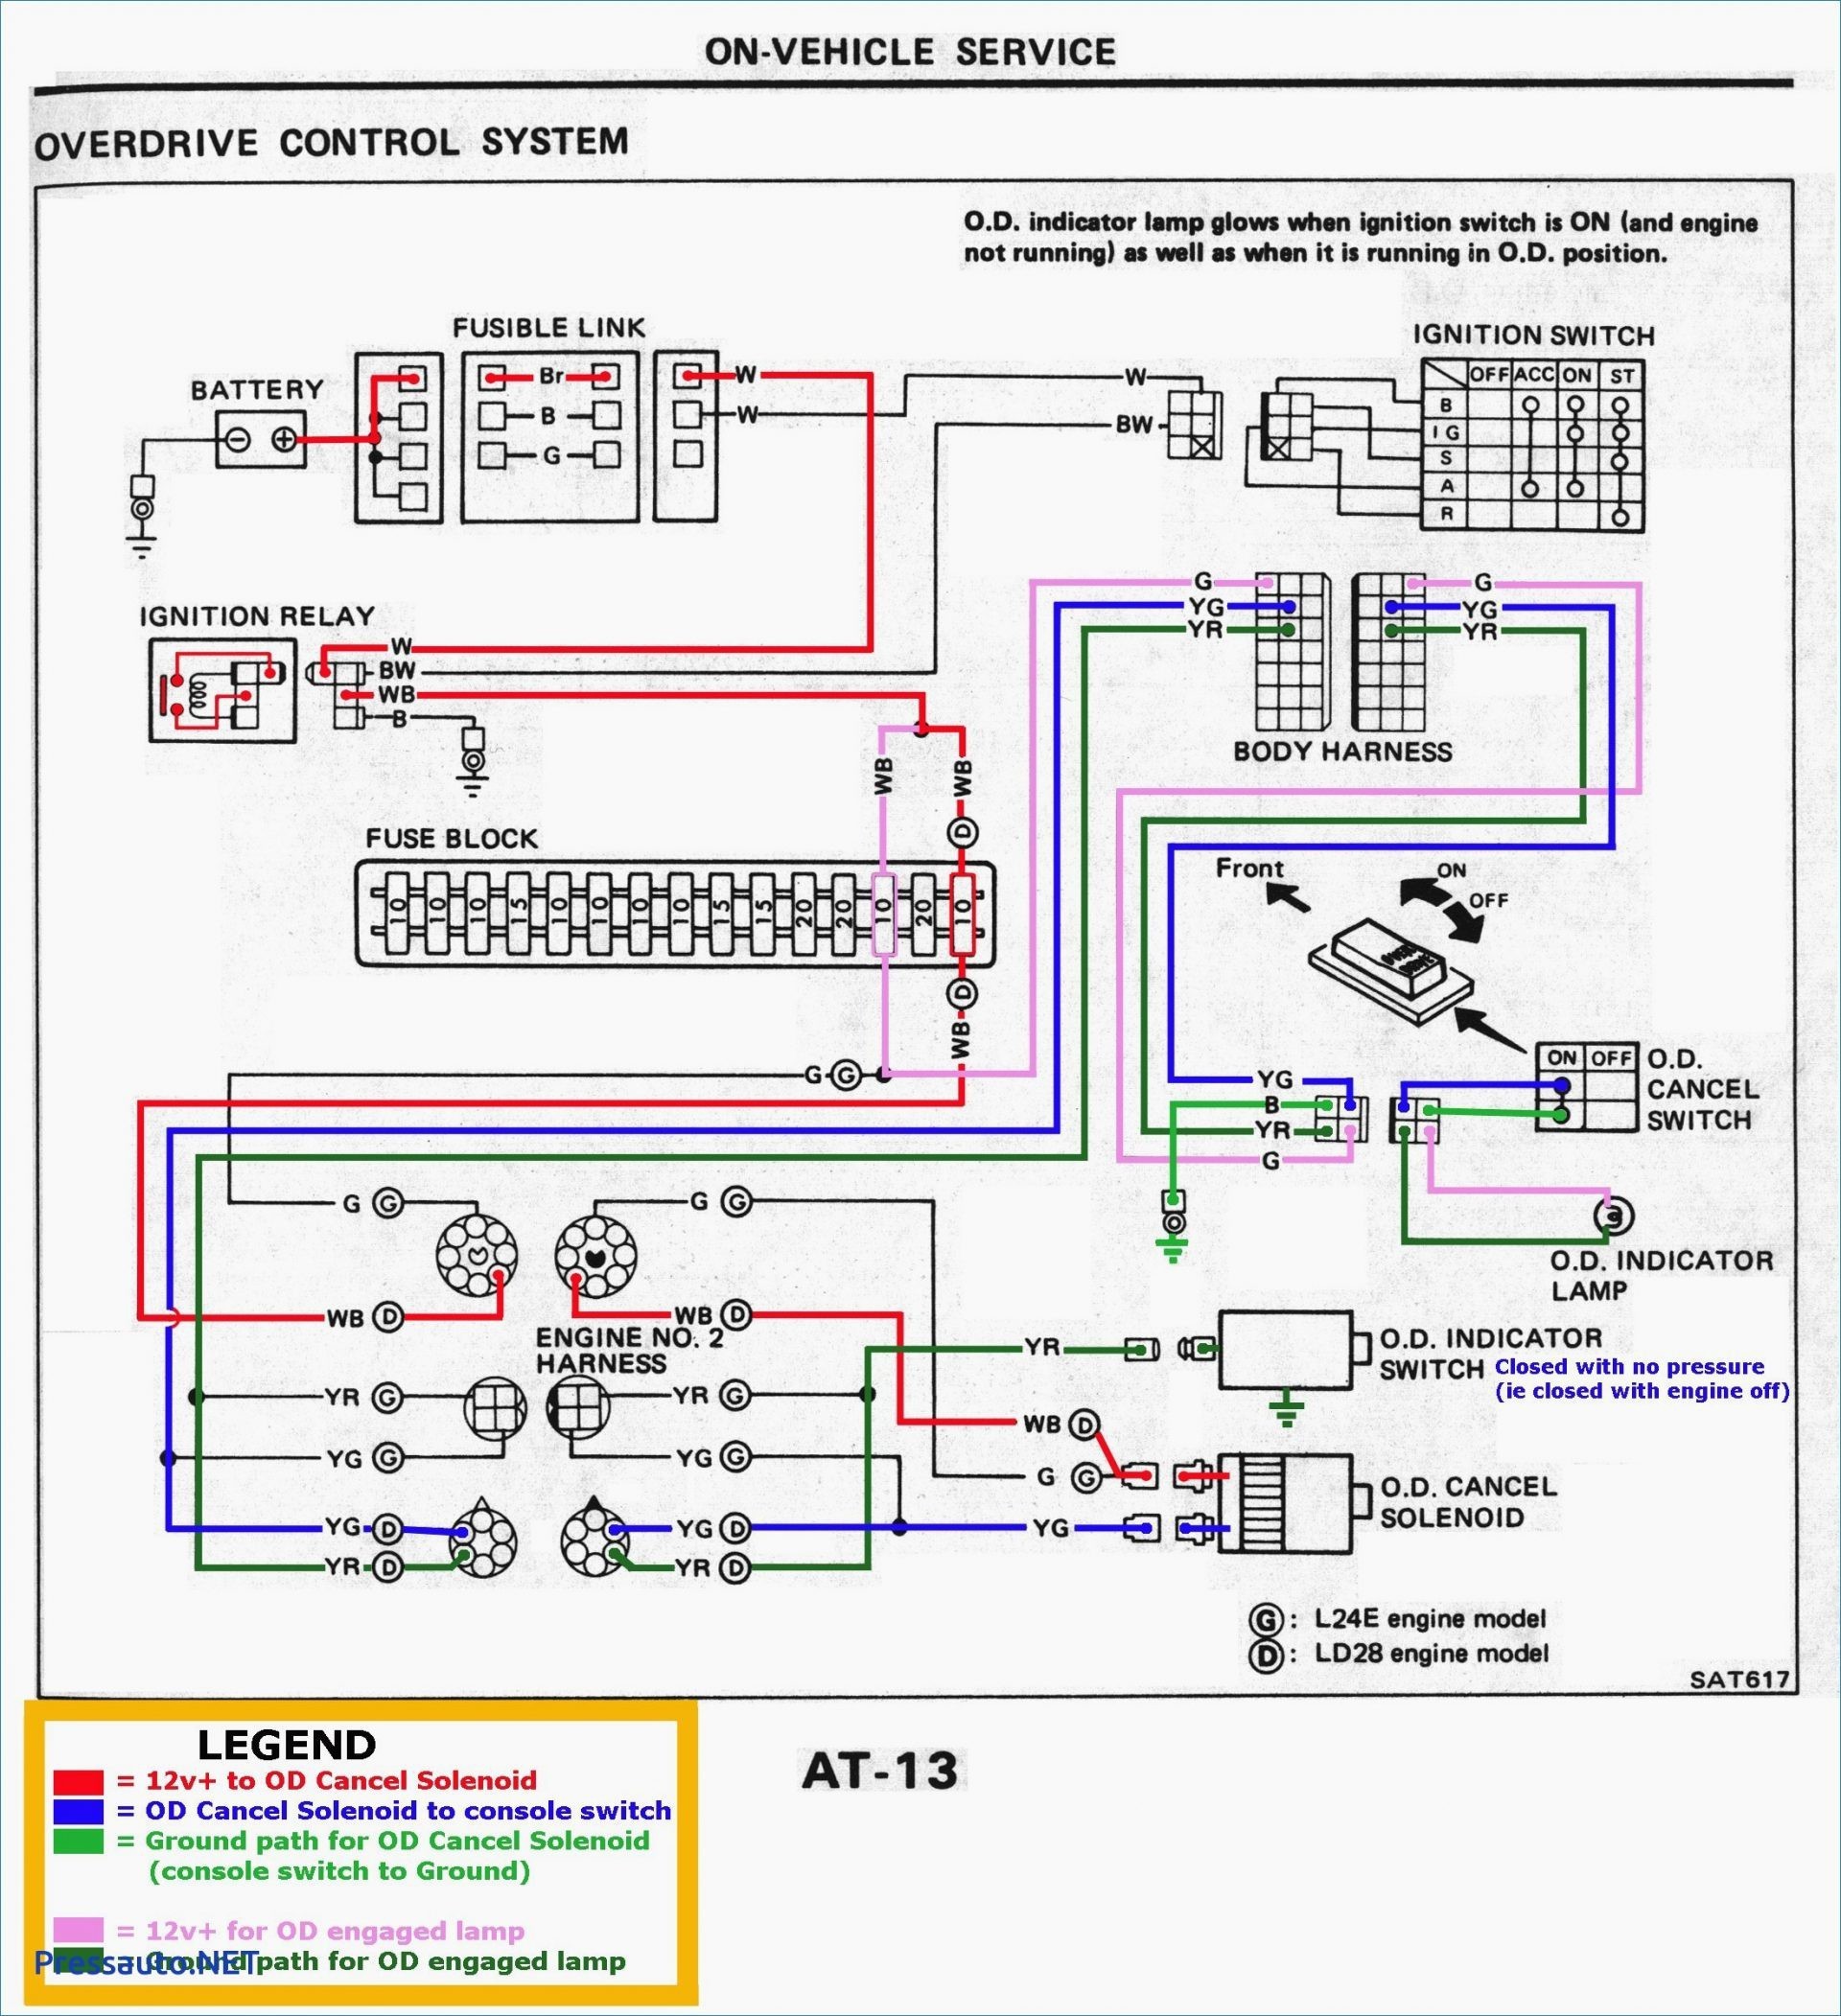 2006 Suzuki Aerio Taillights Wiring Diagram from mainetreasurechest.com